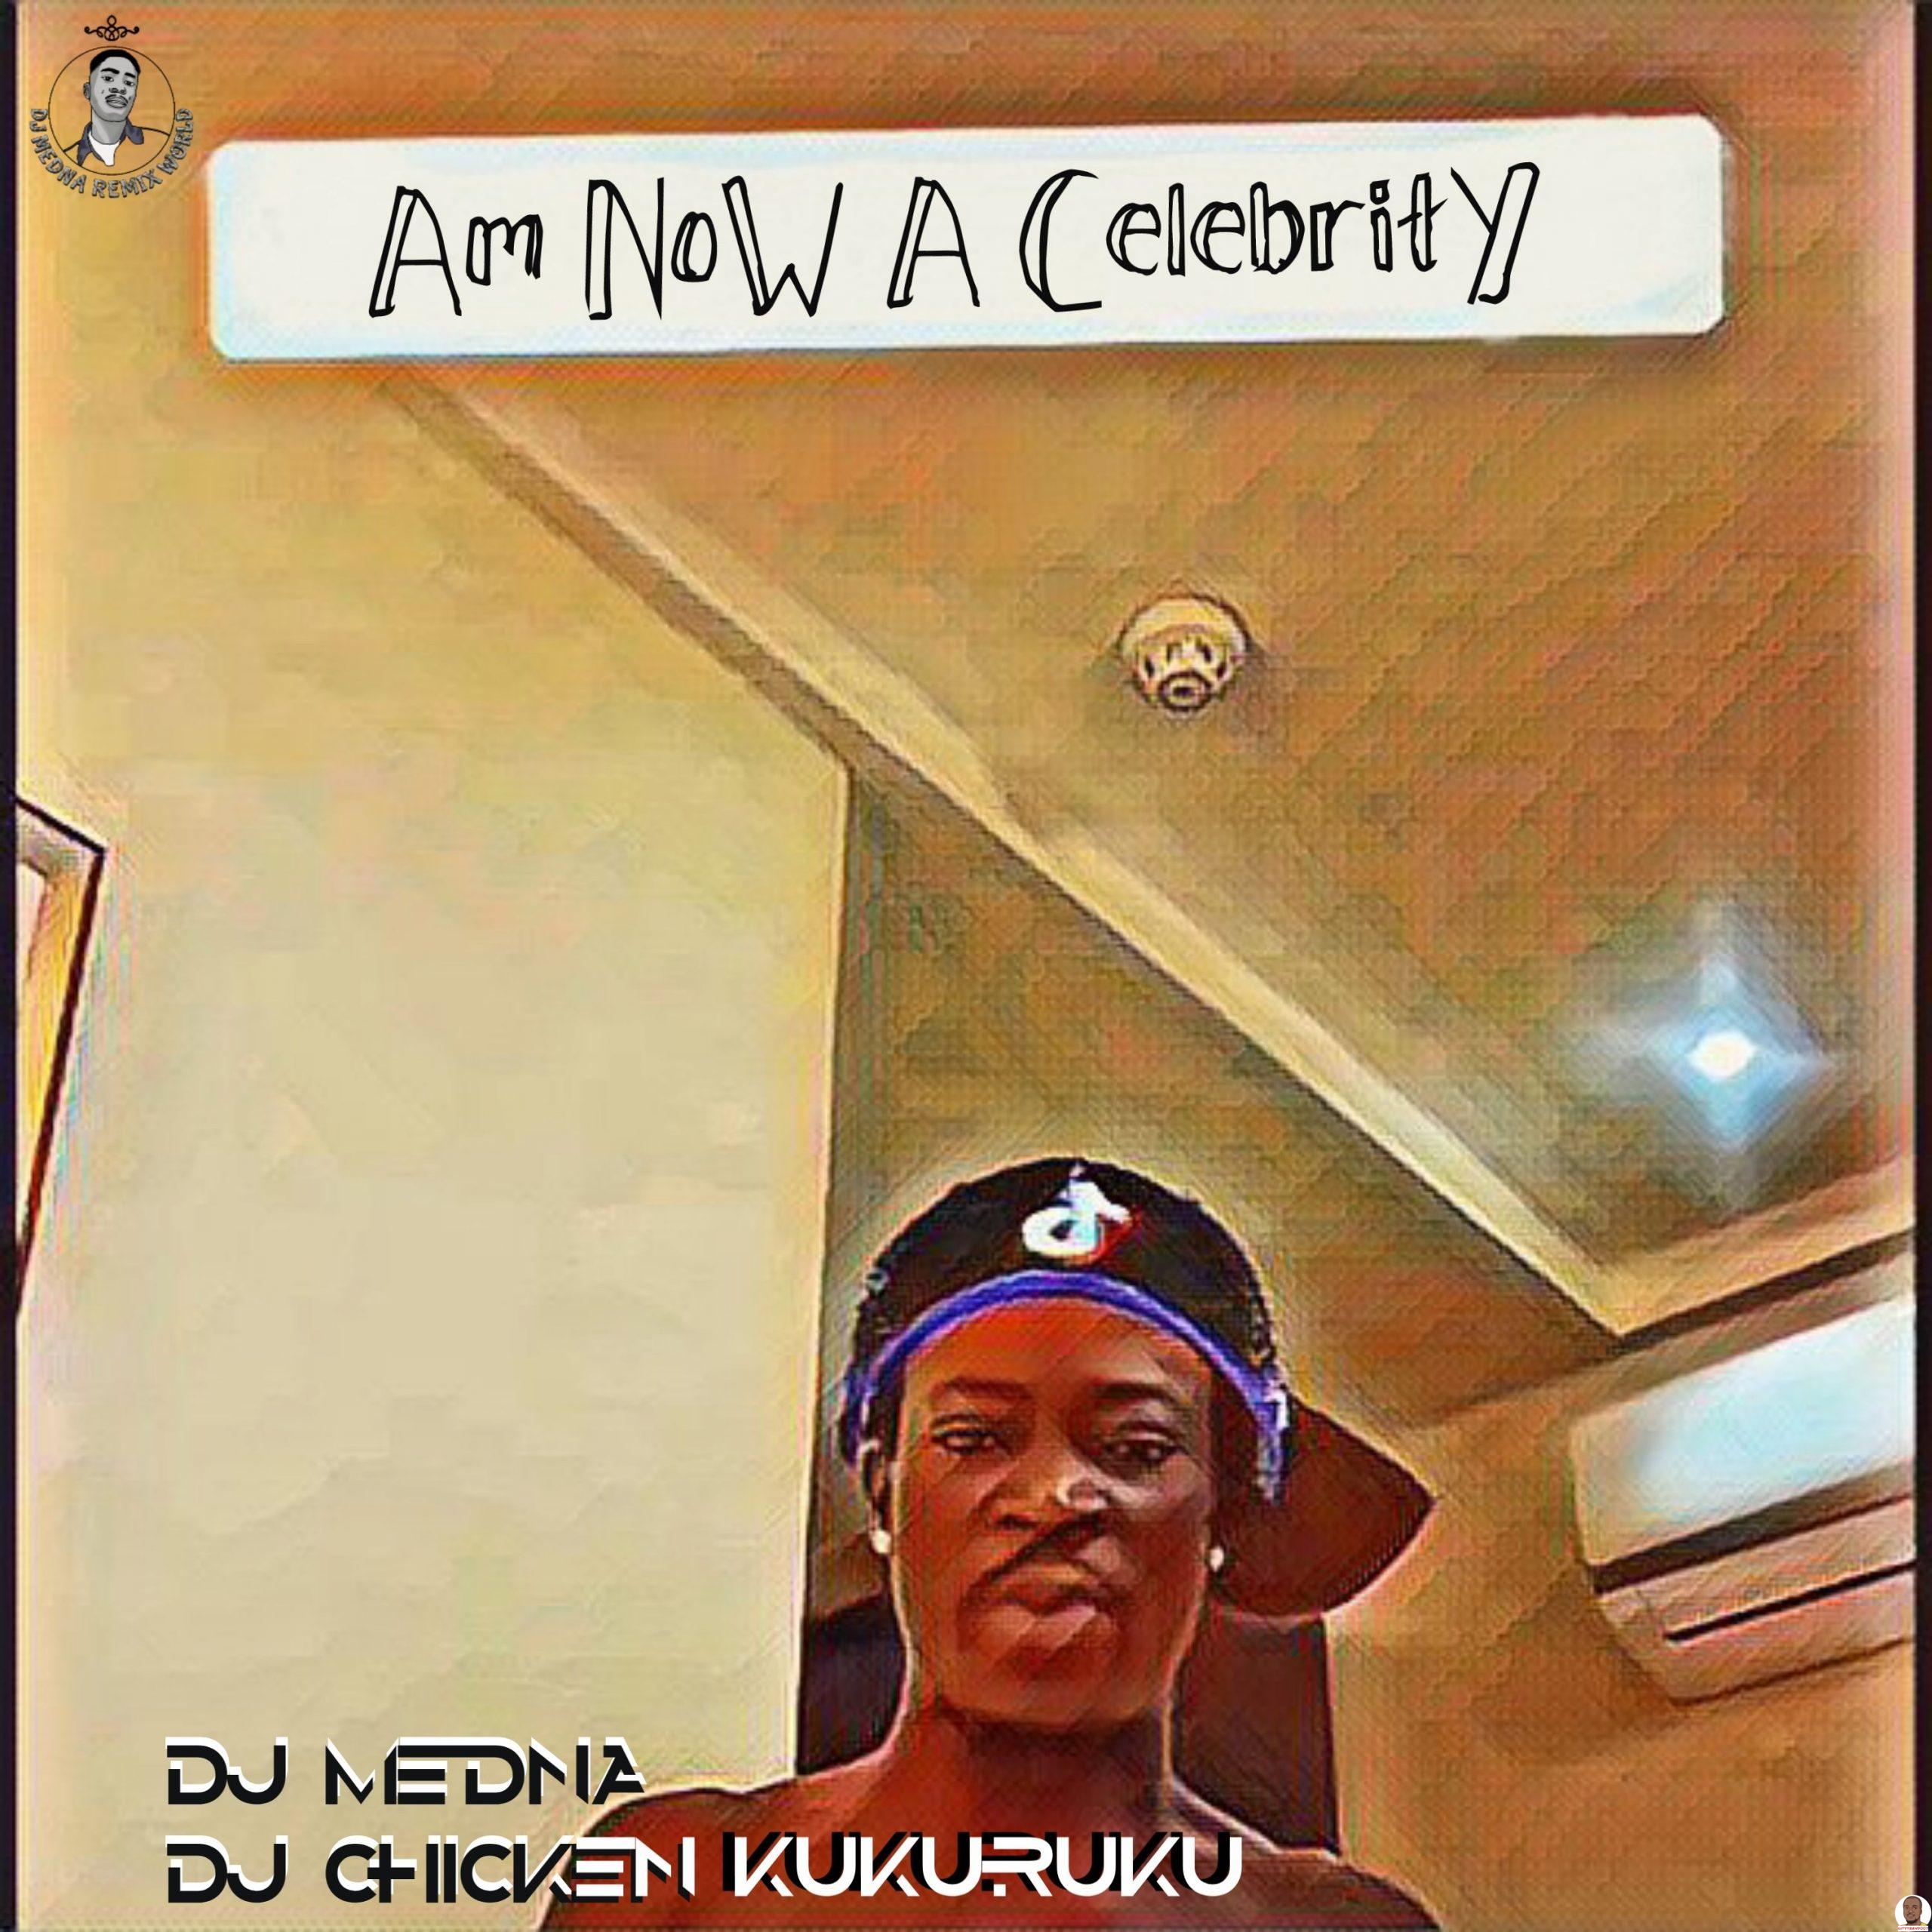 DJ Medna DJ Chicken Kukuruku — Am Now a Celebrity scaled